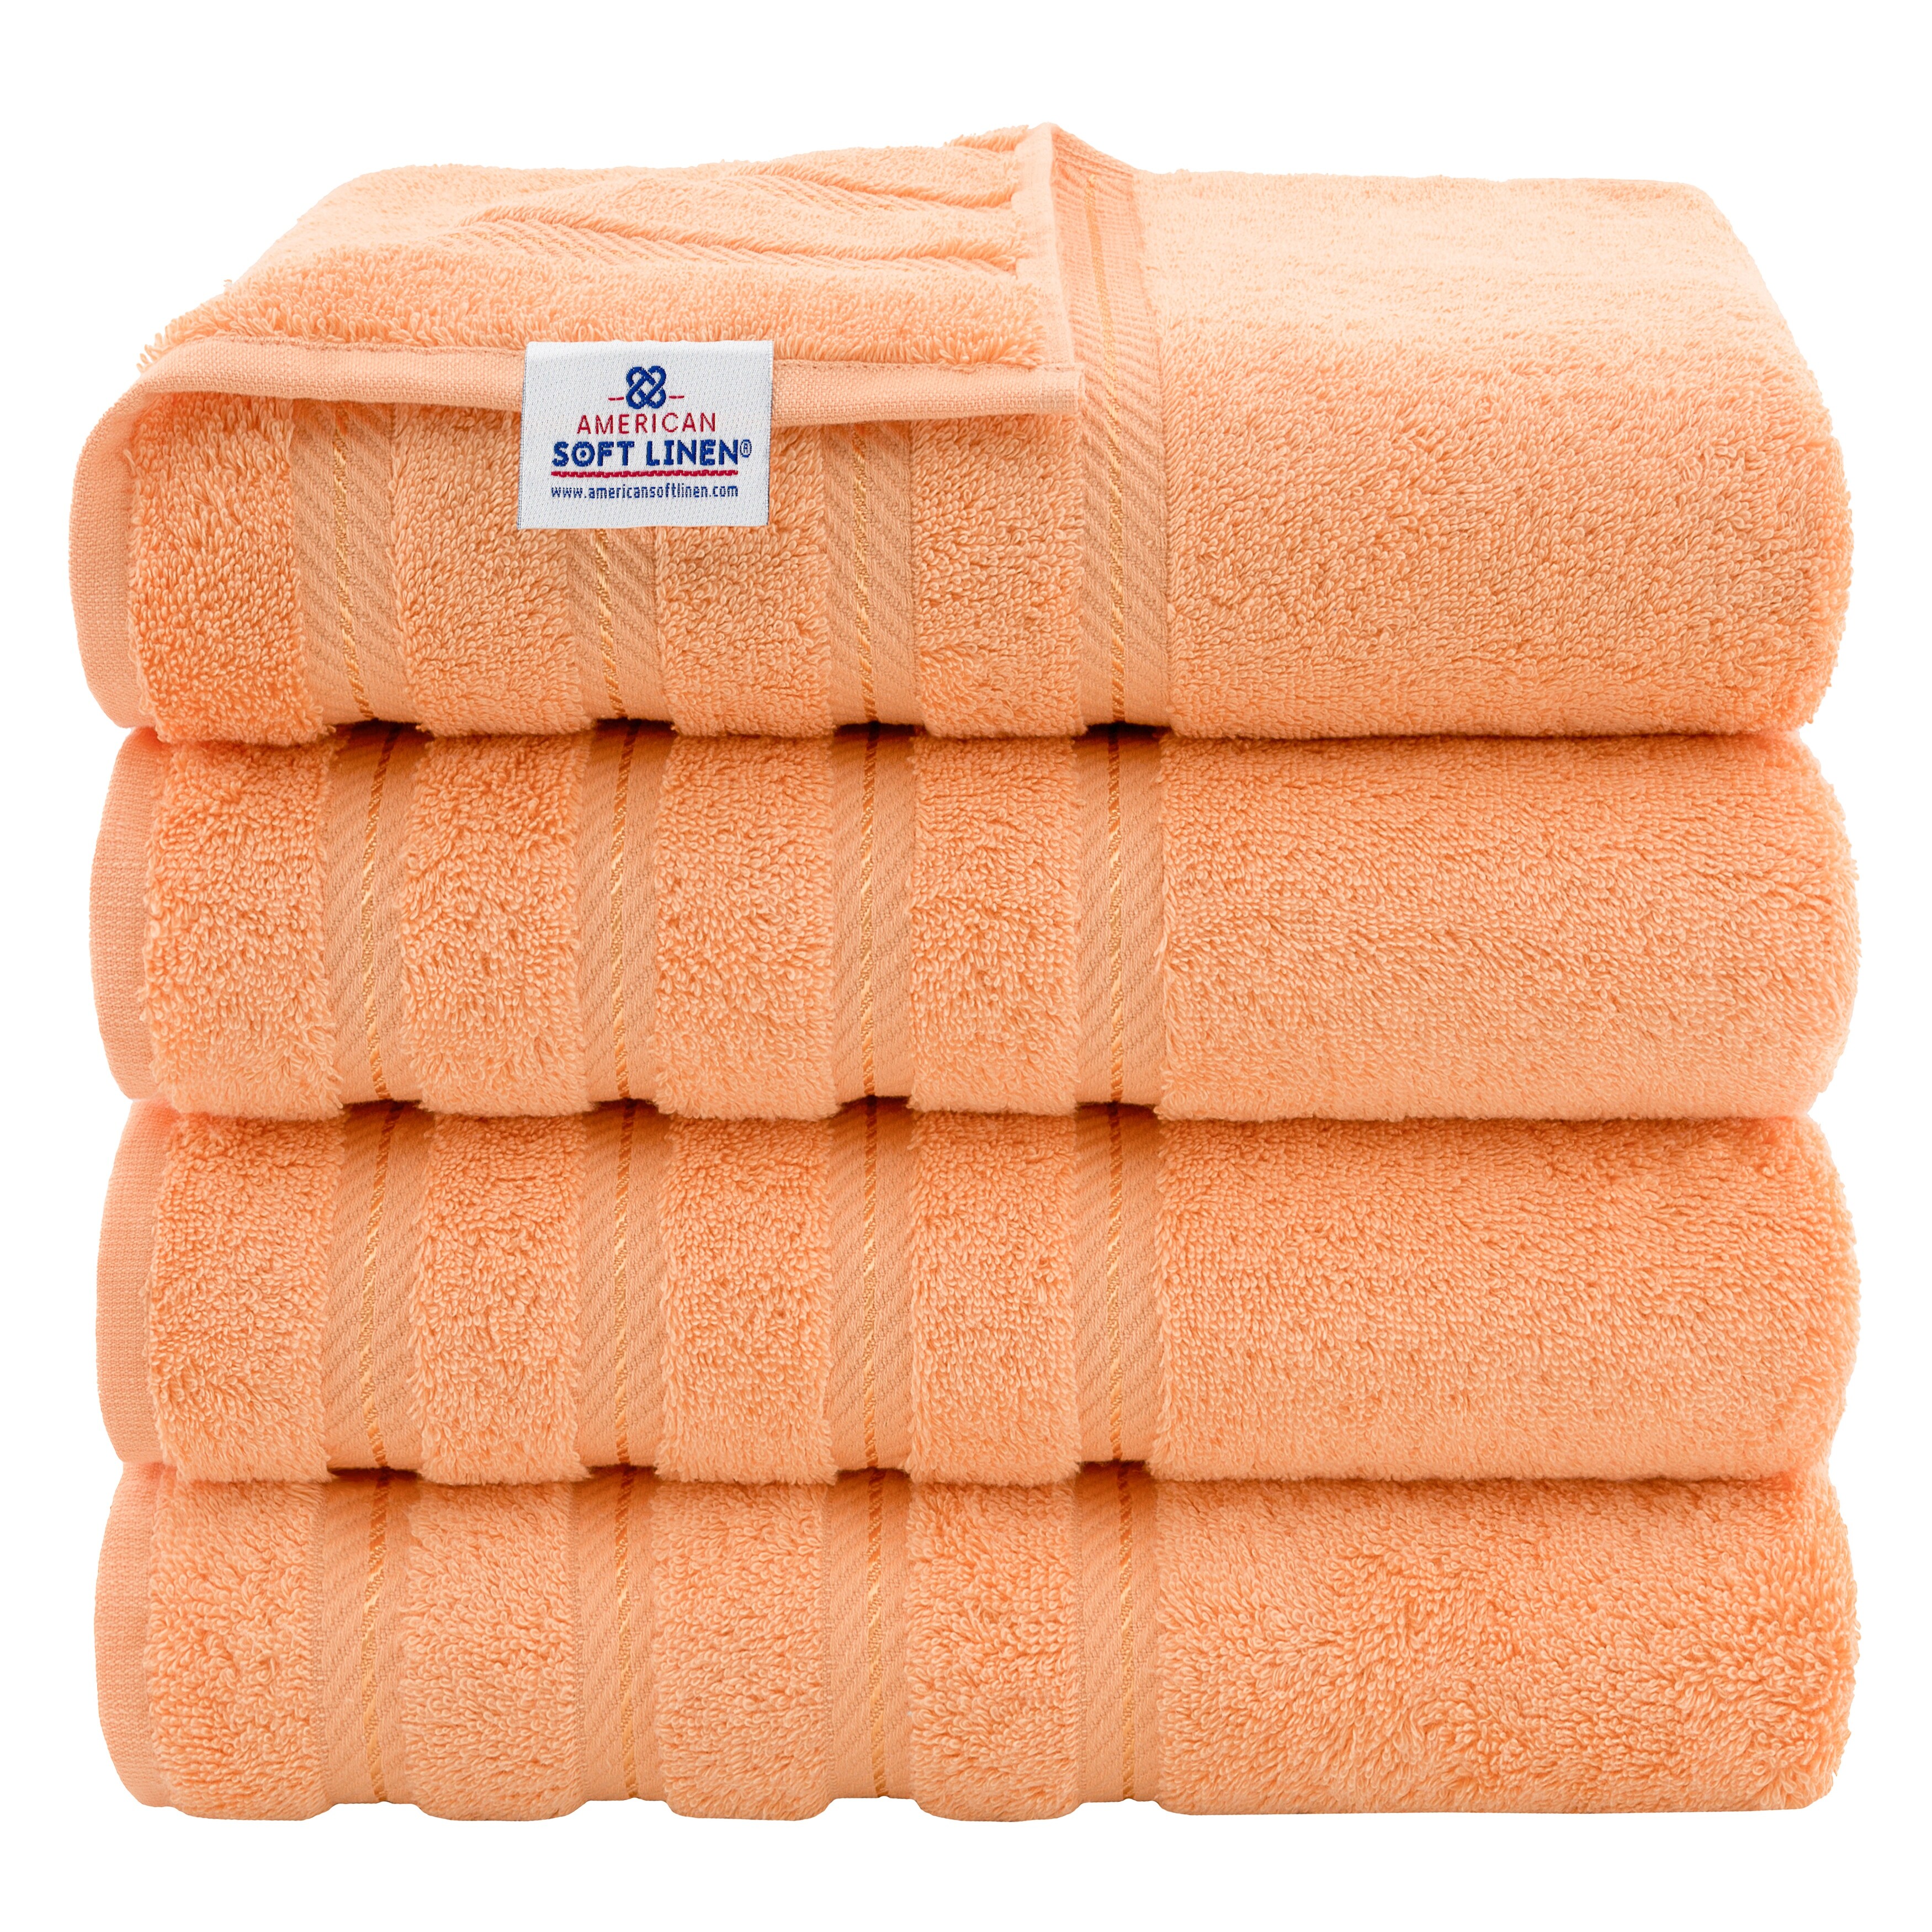 American Soft Linen Bath Towel Set, 4-Piece 100% Turkish Cotton Bath Towels, 27 x 54 in. Super Soft Towels for Bathroom, Brown